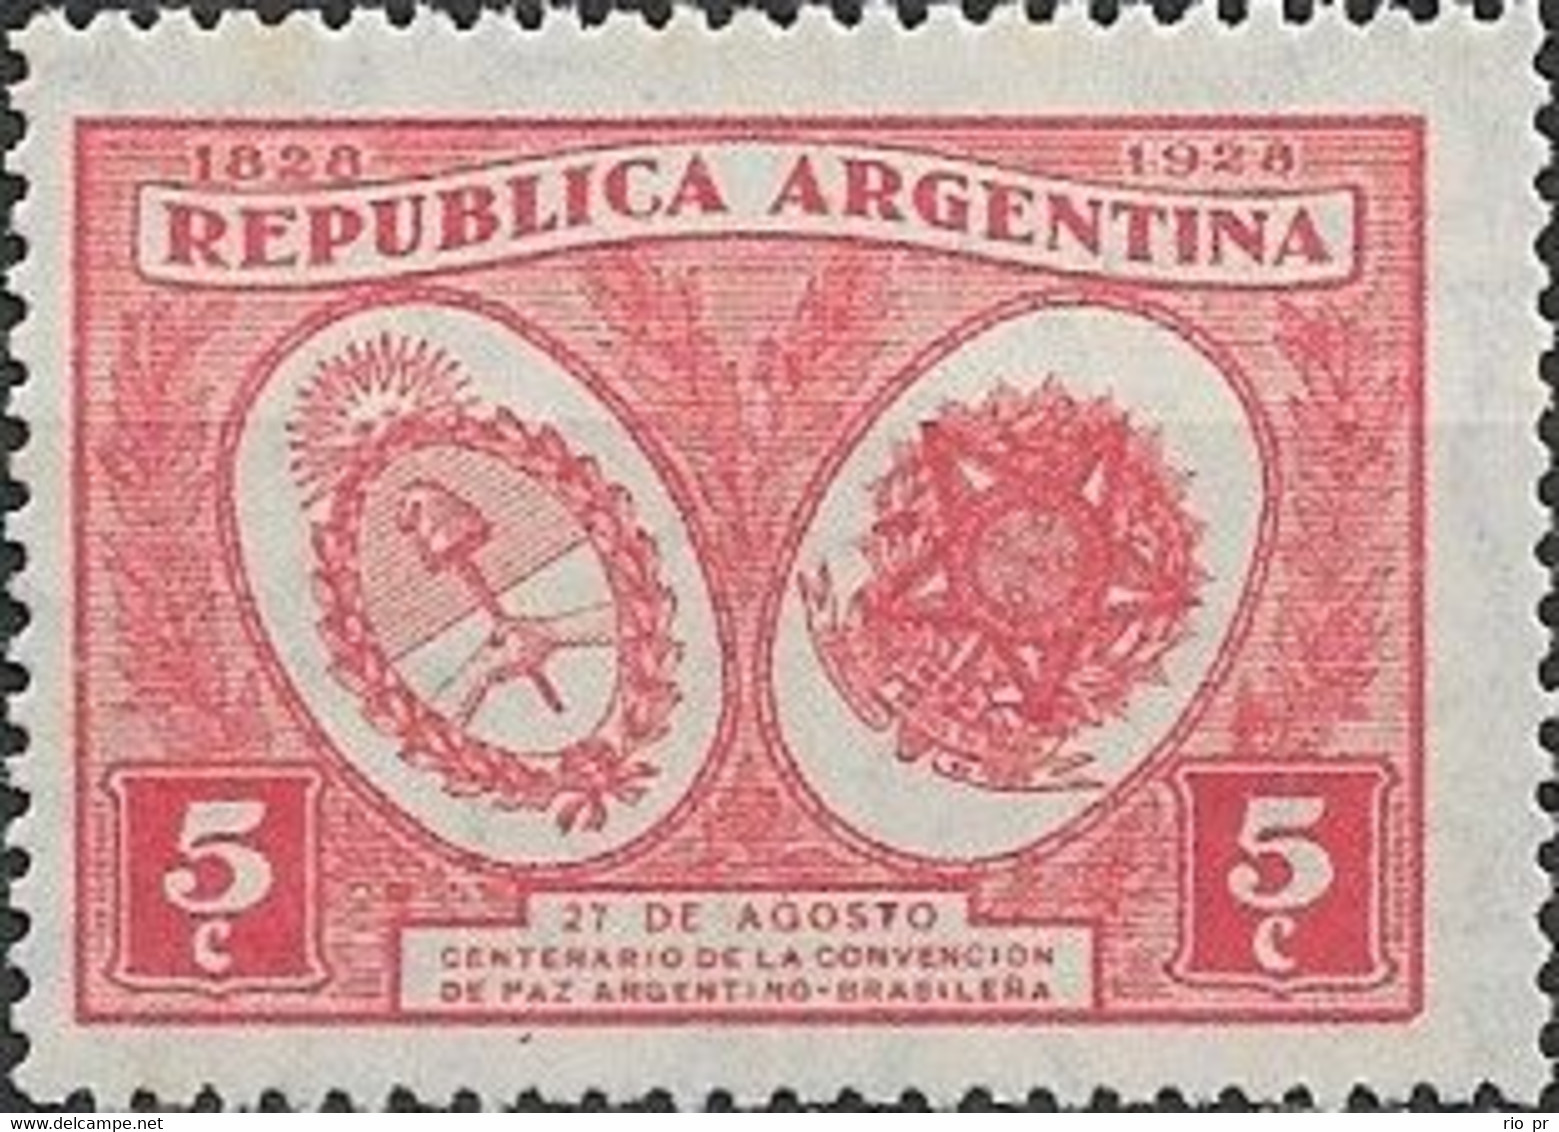 ARGENTINA - CENTENARY OF PEACE BETWEEN BRAZIL AND THE UNITED PROVINCES OF THE RIO DE LA PLATA (5 C) 1928 - MNH - Nuevos